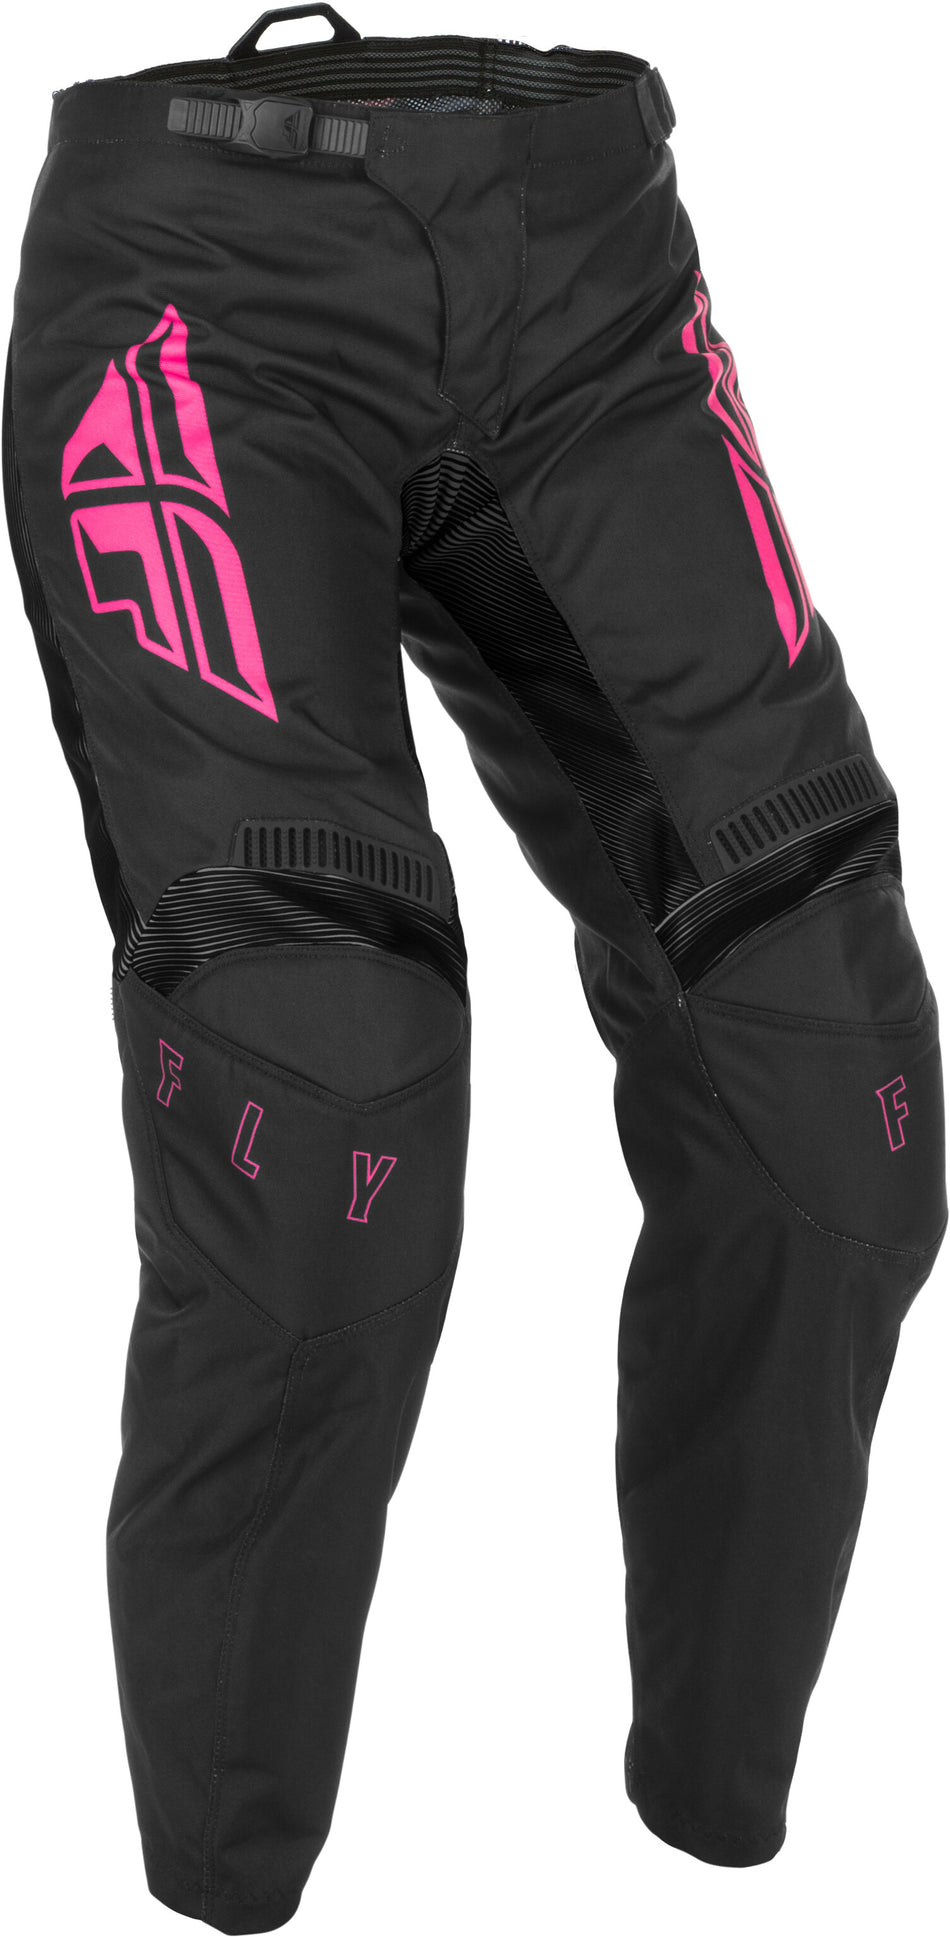 FLY RACING Women's F-16 Pants Black/Pink Sz 11/12 374-83009